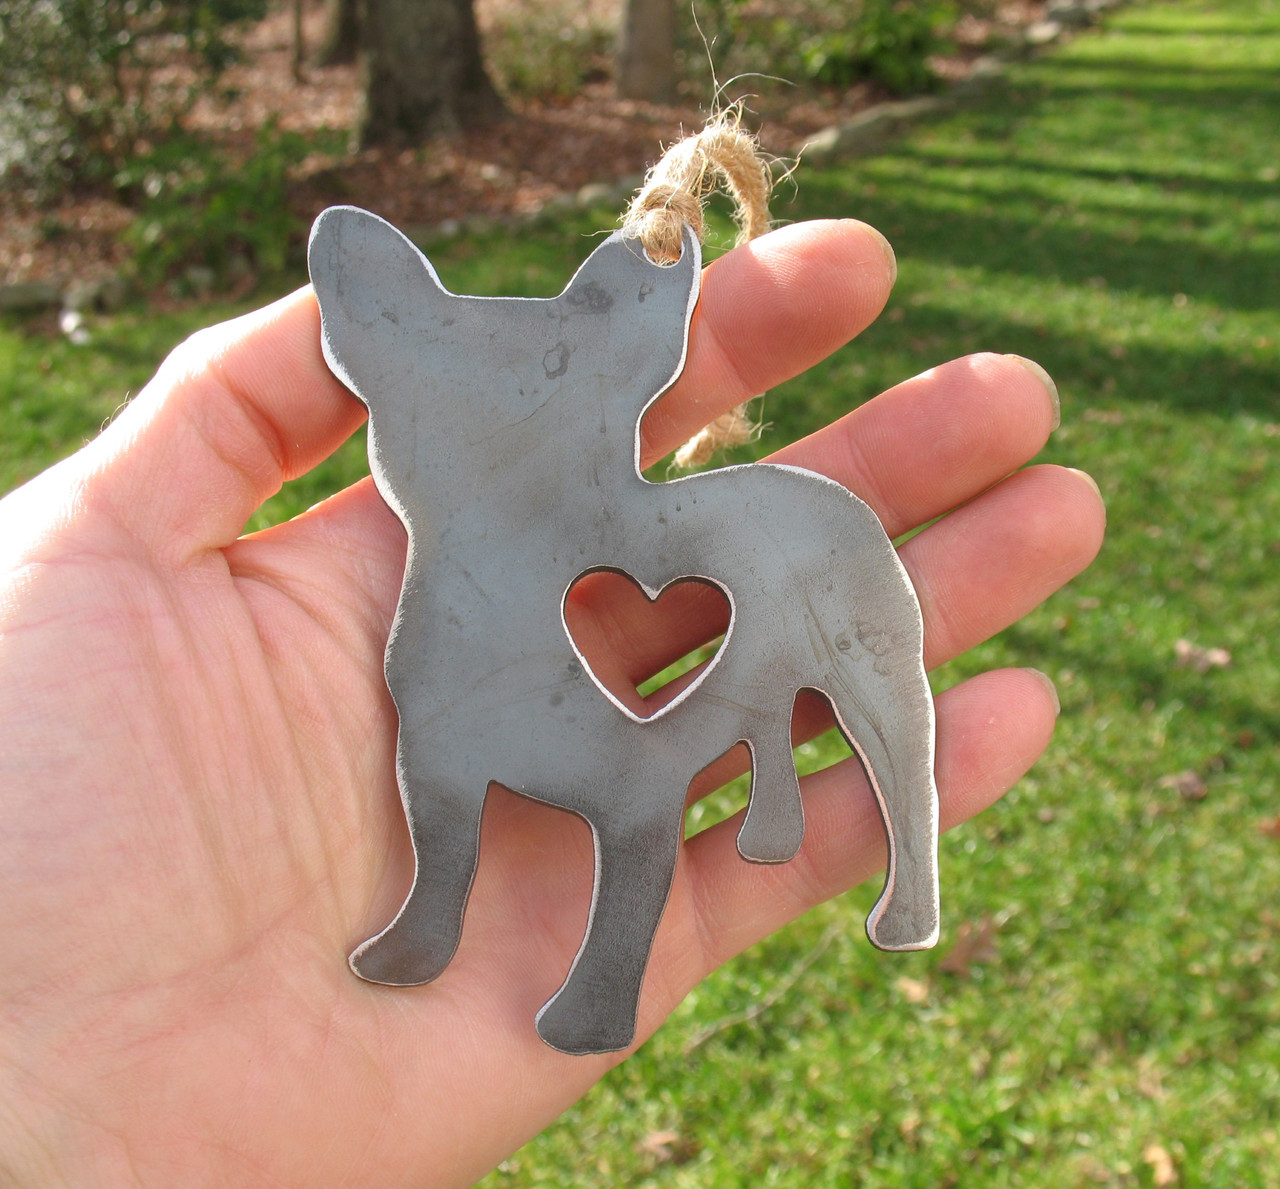 French Bulldog Dog Ornament 2 - Metal Dog Christmas Ornament - Pet Lover Memorial Ornament - Pet Loss Dog Memorial Ornament Remembrance Gift 